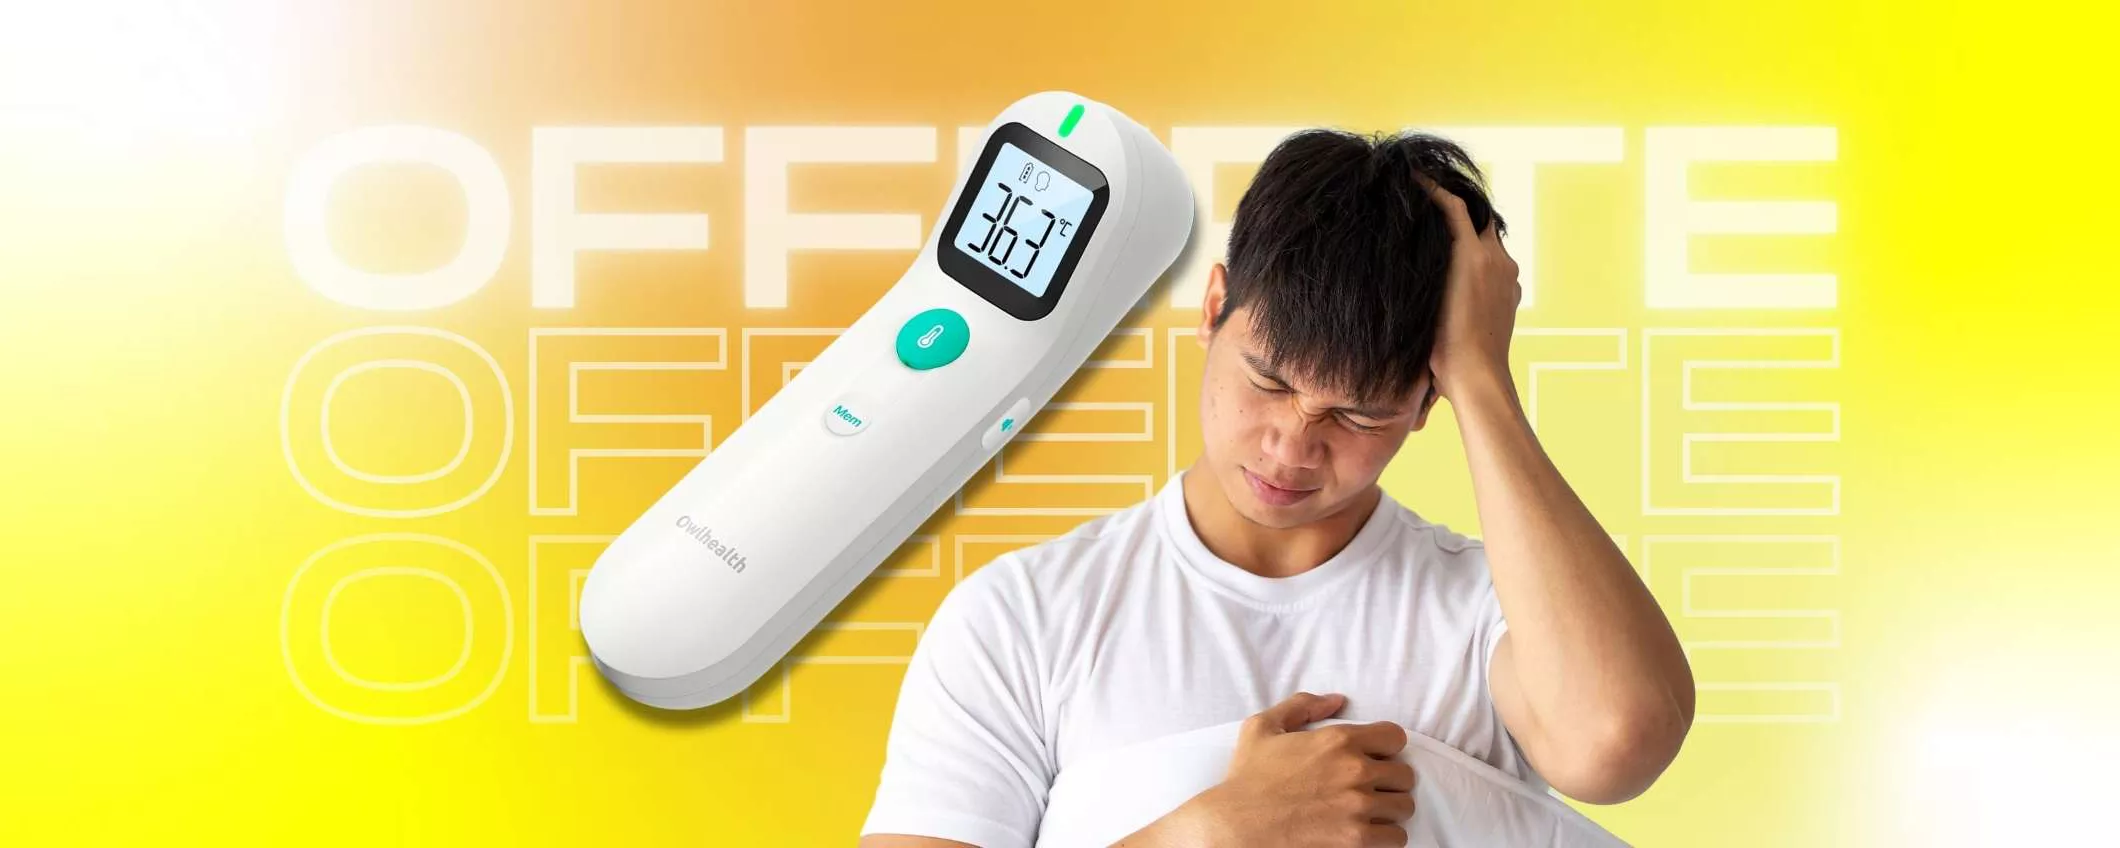 Influenza NON ti temo: termometro a infrarossi istantaneo (-13%)